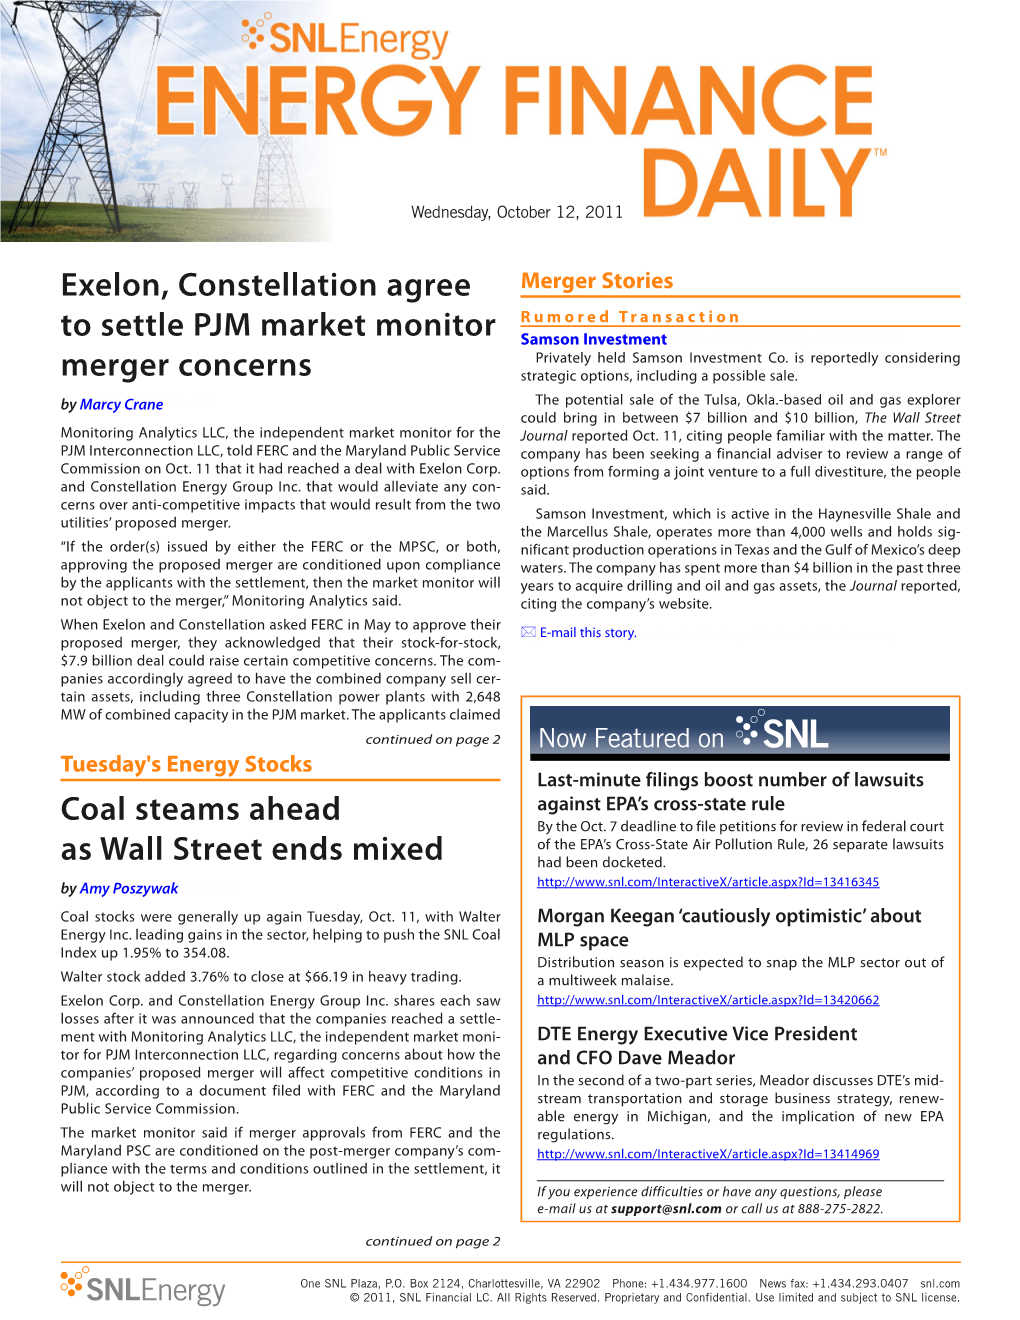 Exelon, Constellation Agree to Settle PJM Market Monitor Merger